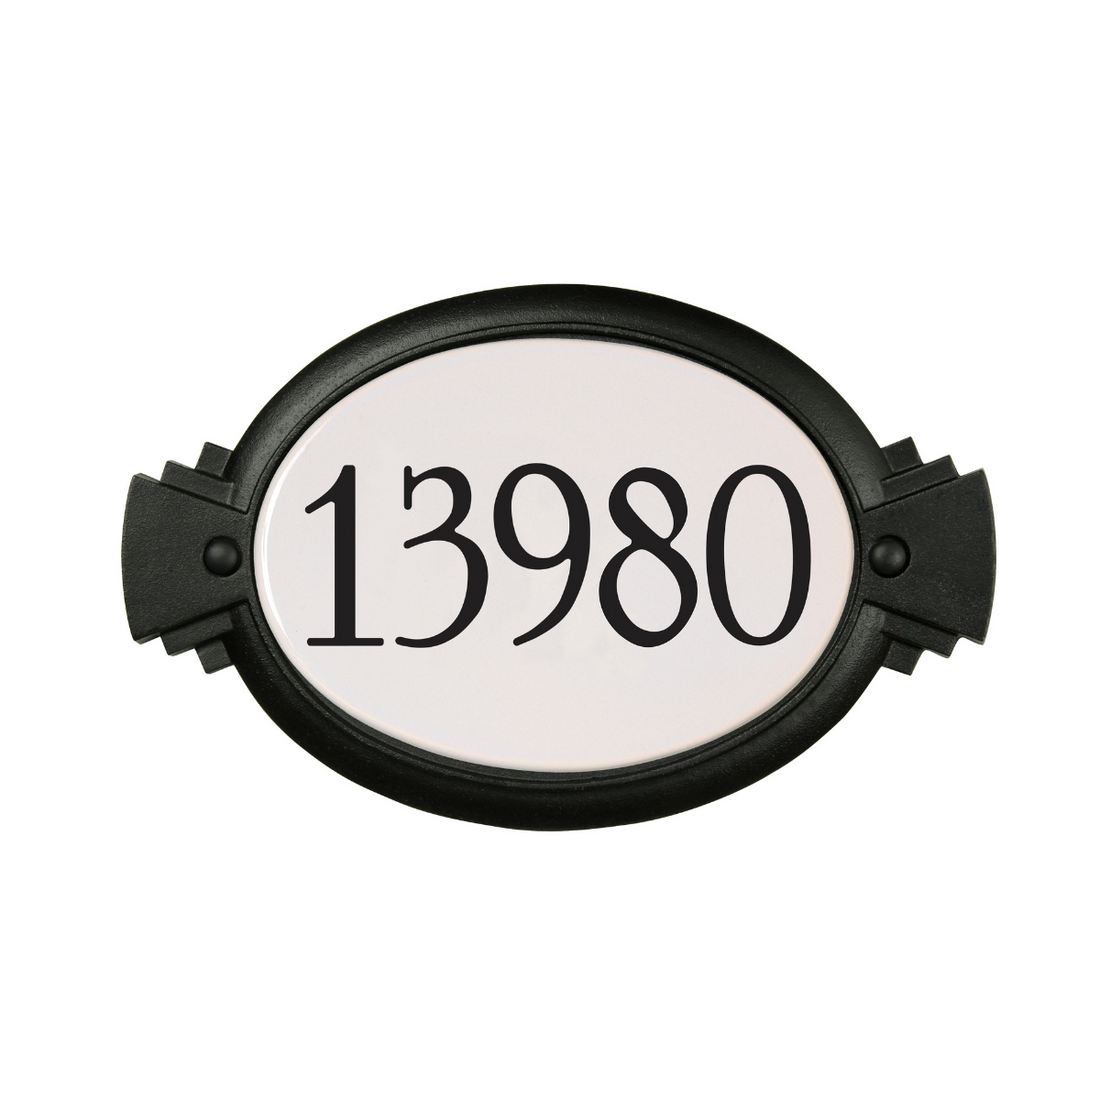 Oxford - Address Plaque - 1722